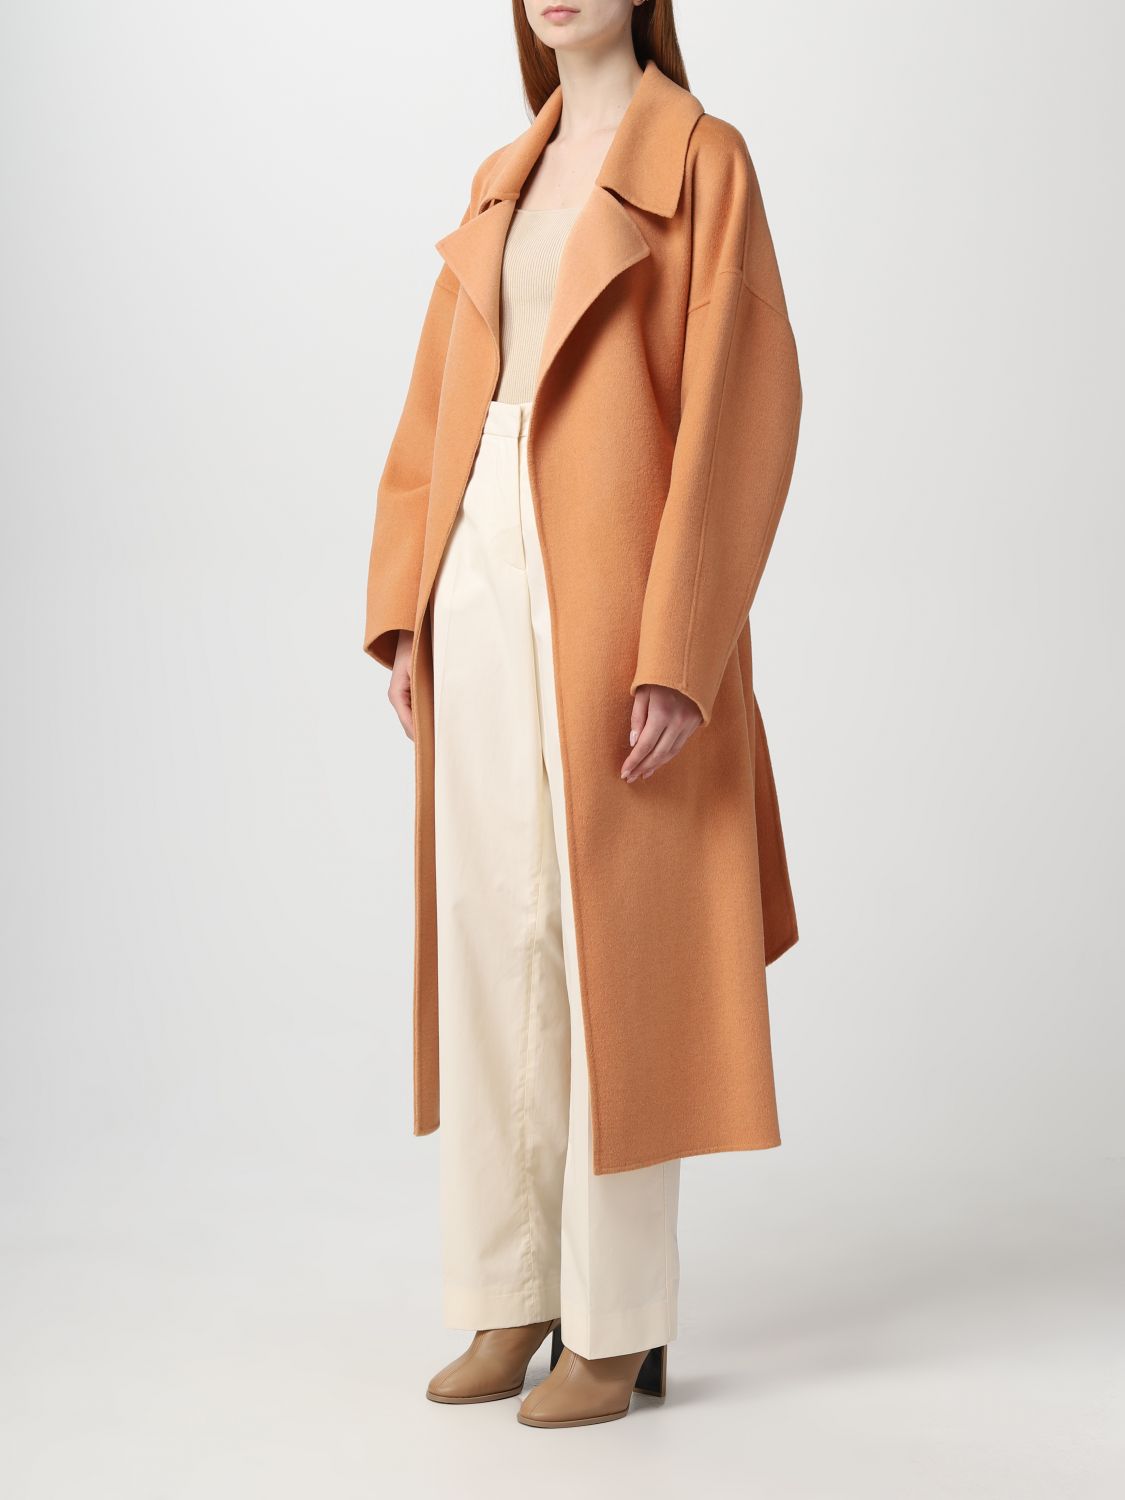 KLEIN: for woman - Apricot | Calvin Klein coat K20K205006 online on GIGLIO.COM